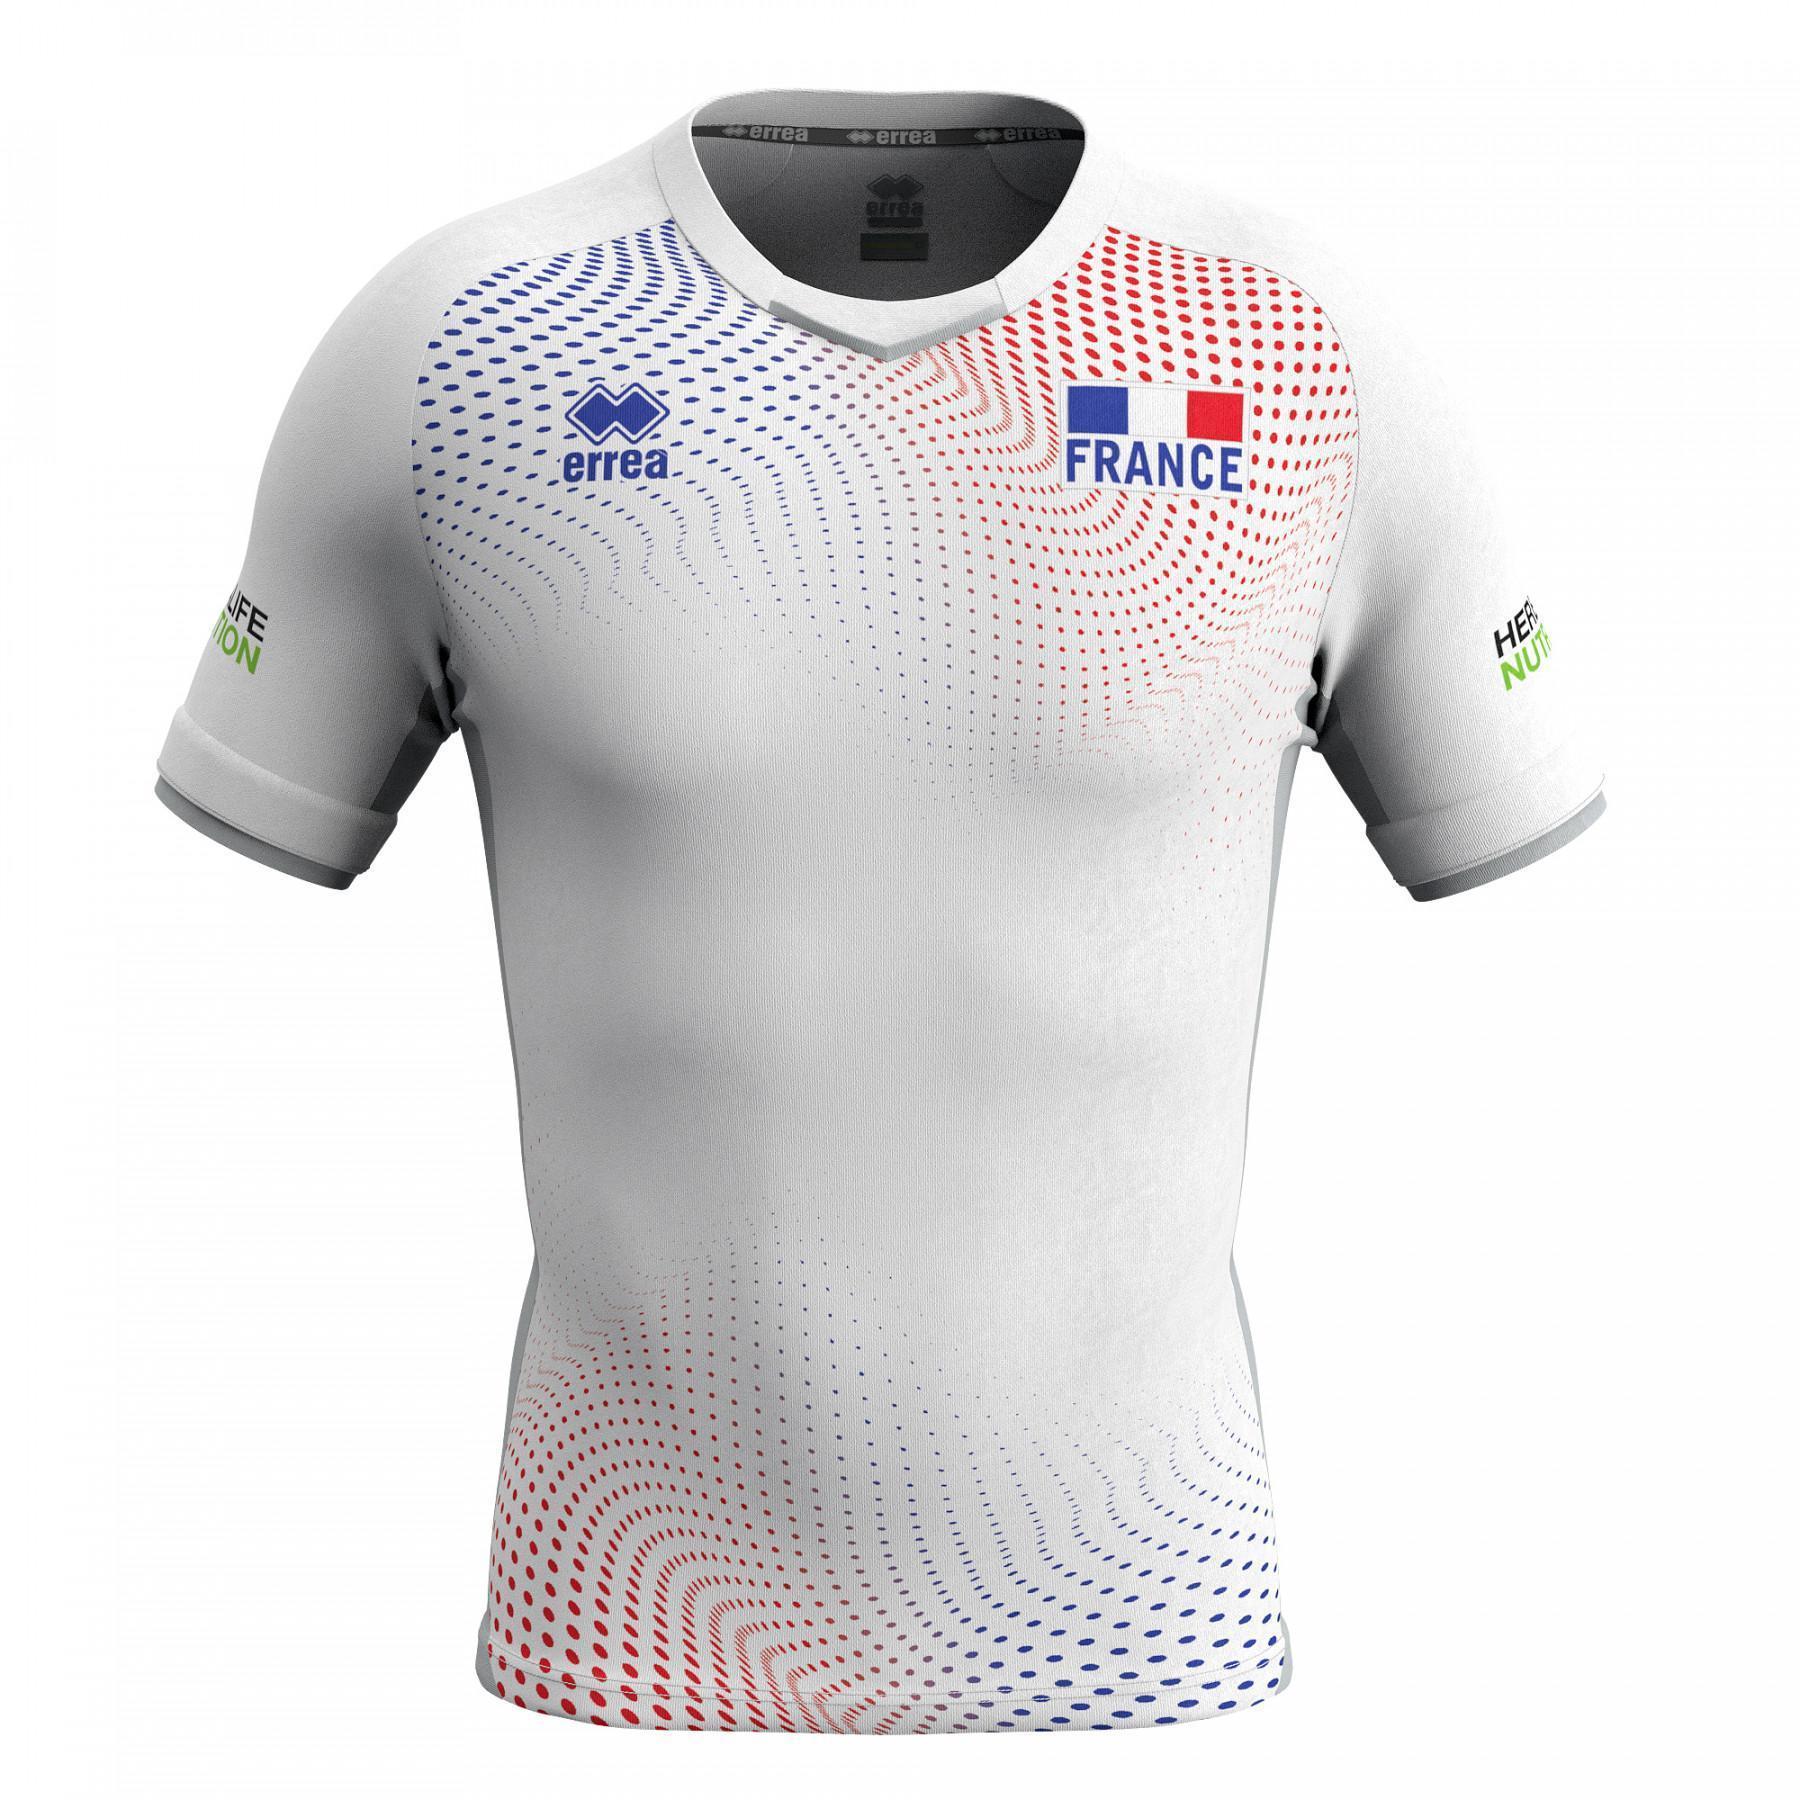 Camiseta niños away Equipo francés 2020